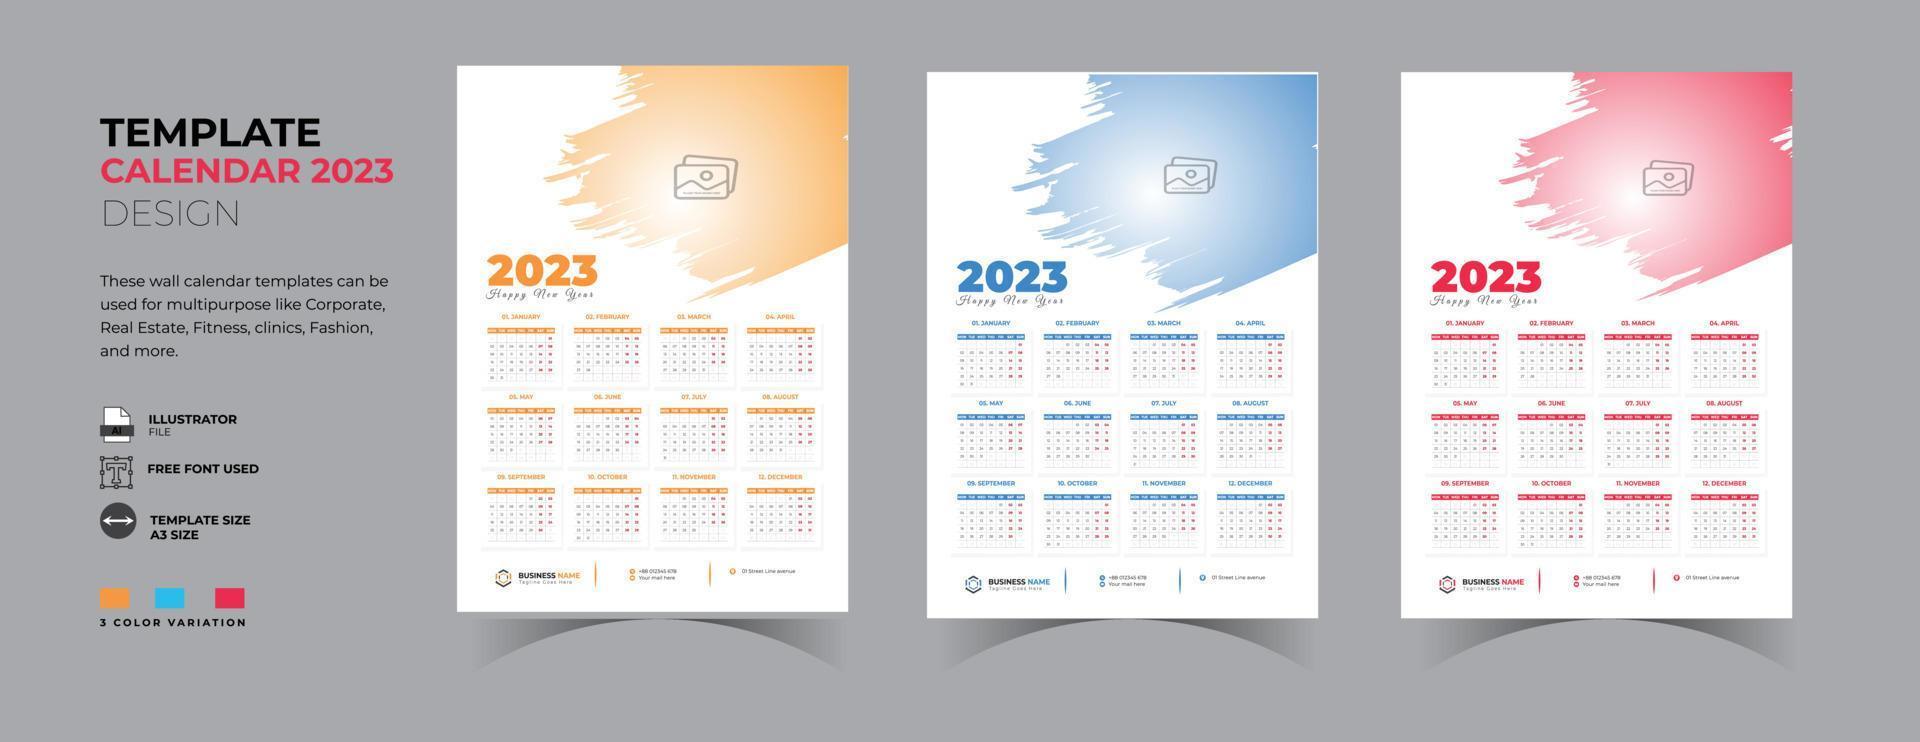 2023 One Page Wall Calendar 3 color variations calendar design vector